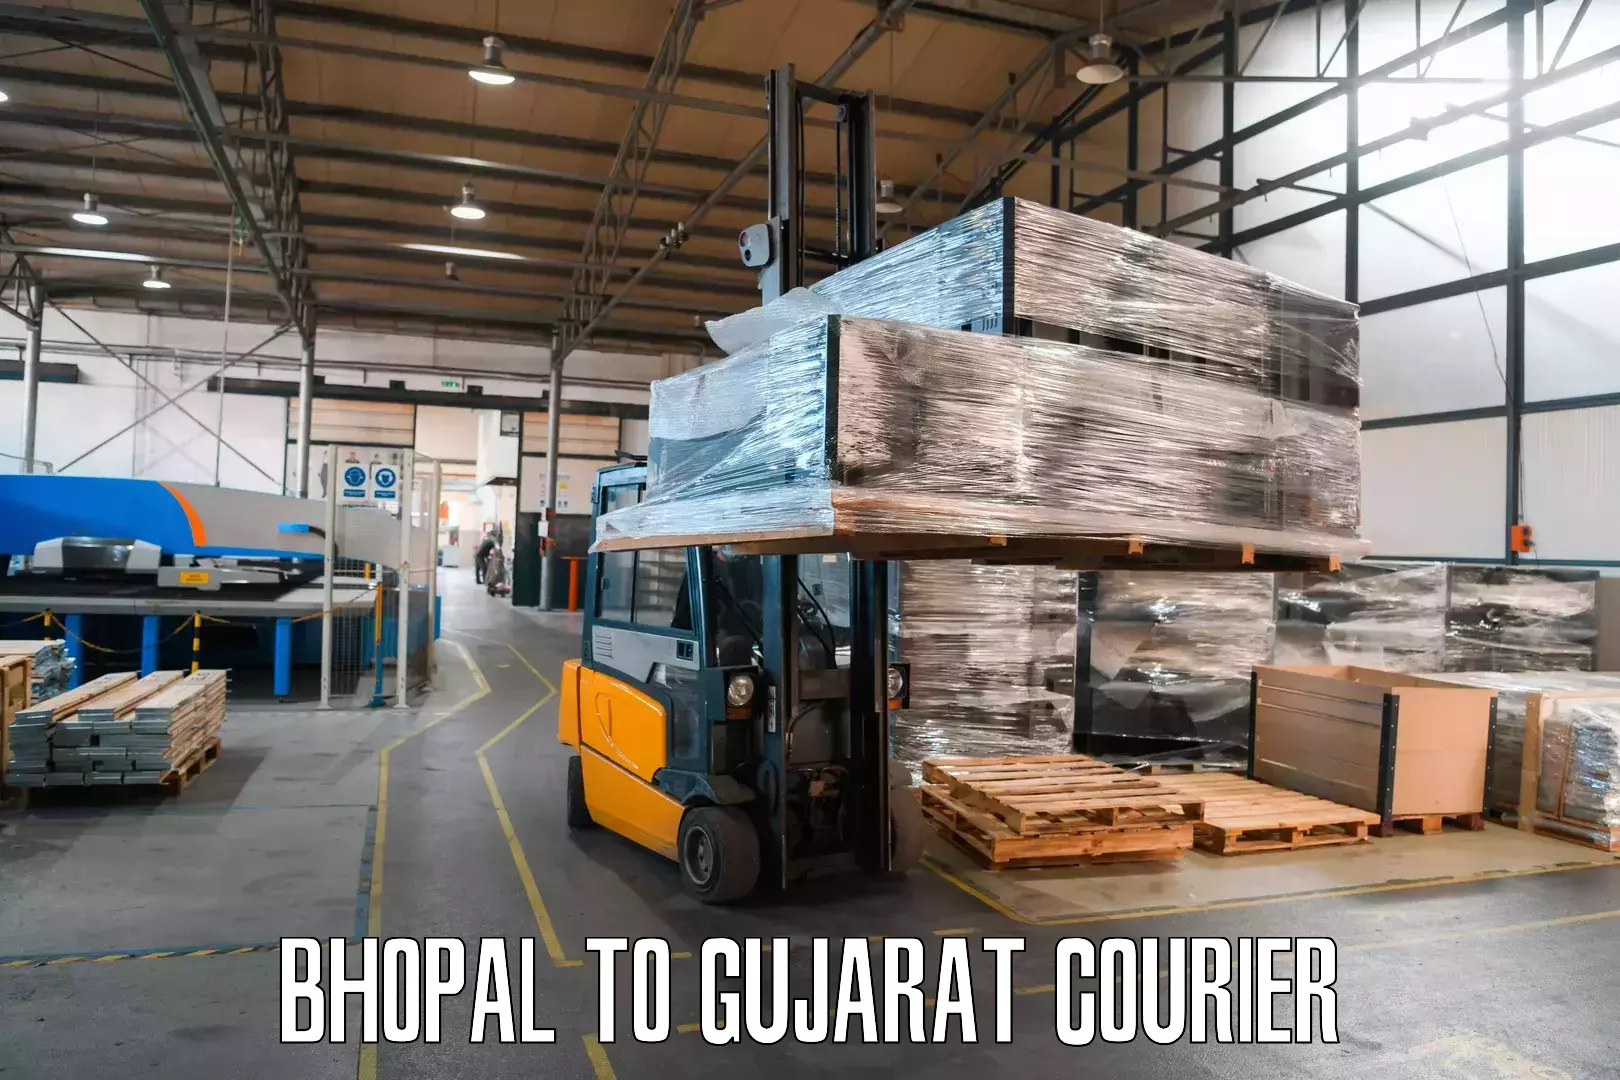 Express courier capabilities in Bhopal to Himatnagar